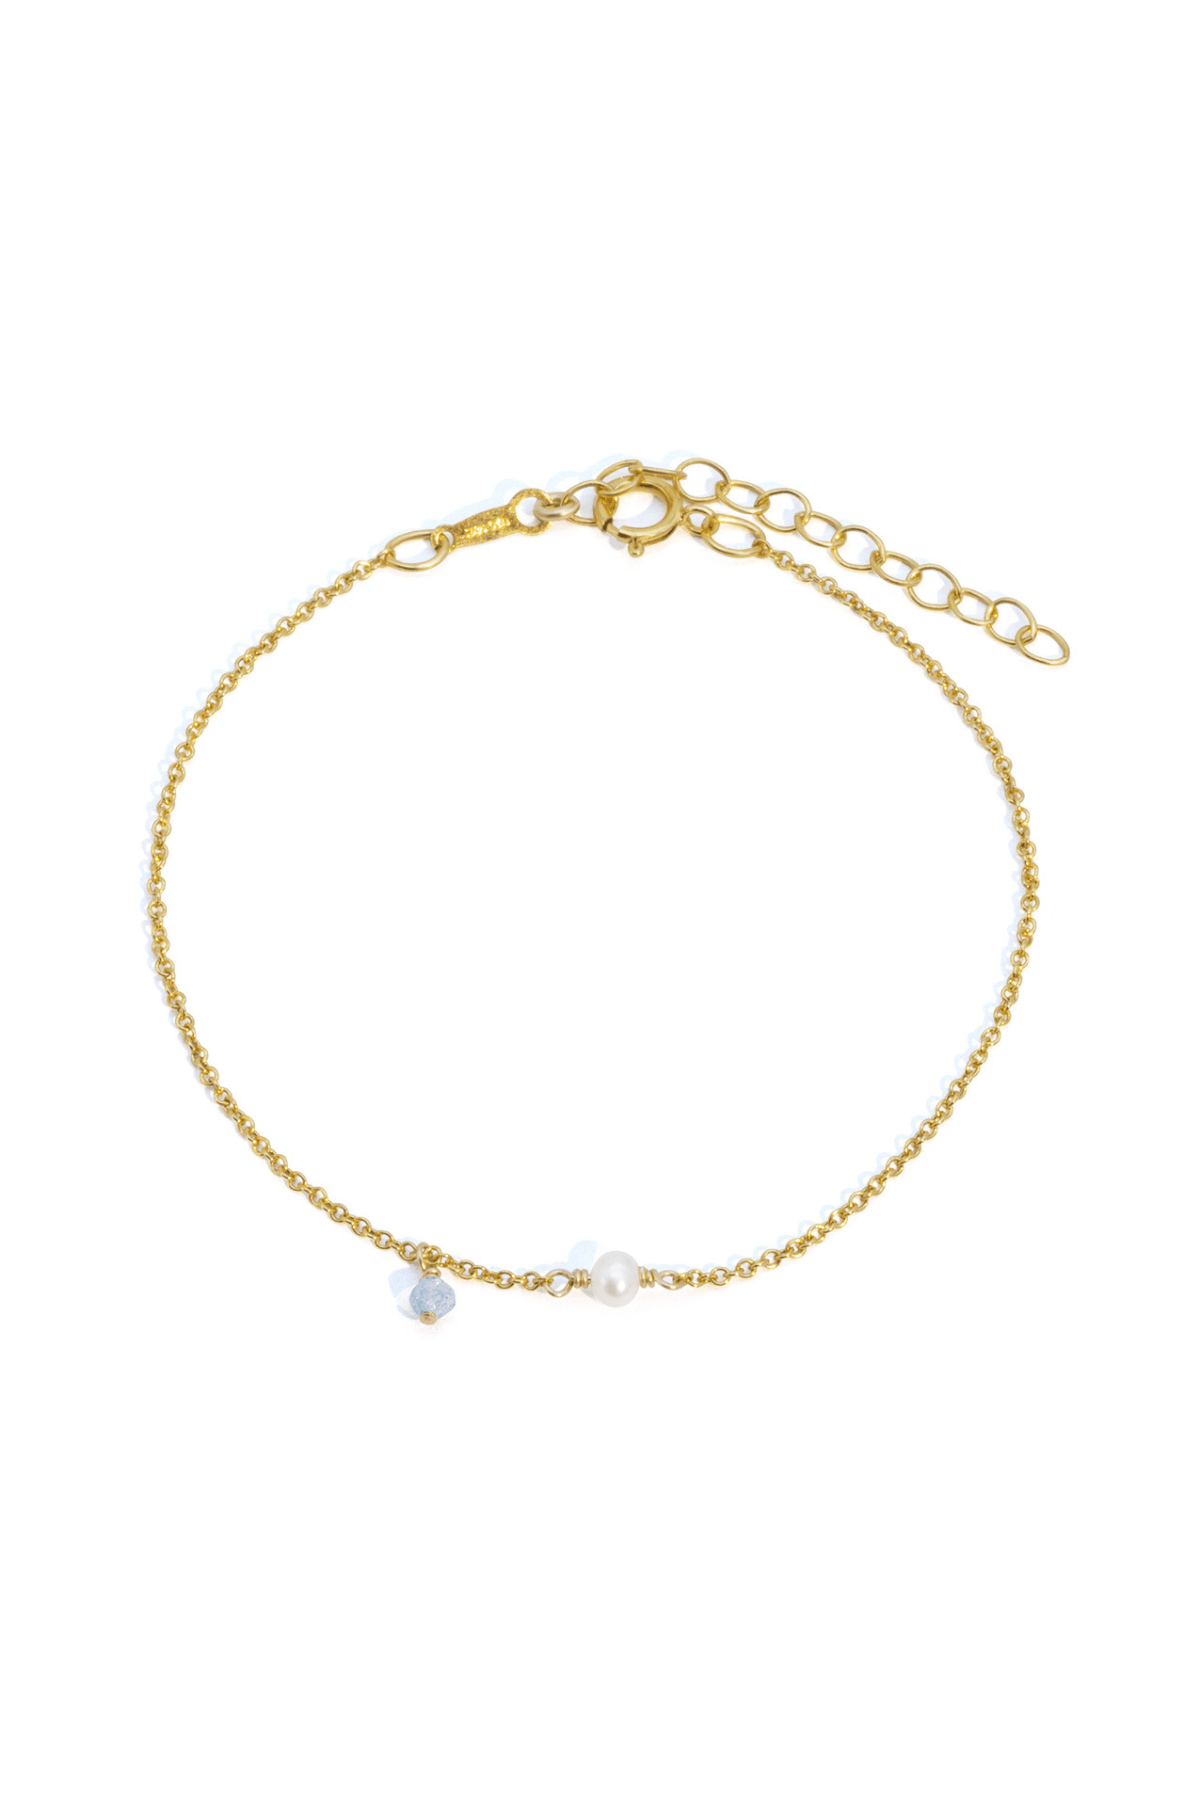 The Gold Petrichor Aquamarine Bracelet